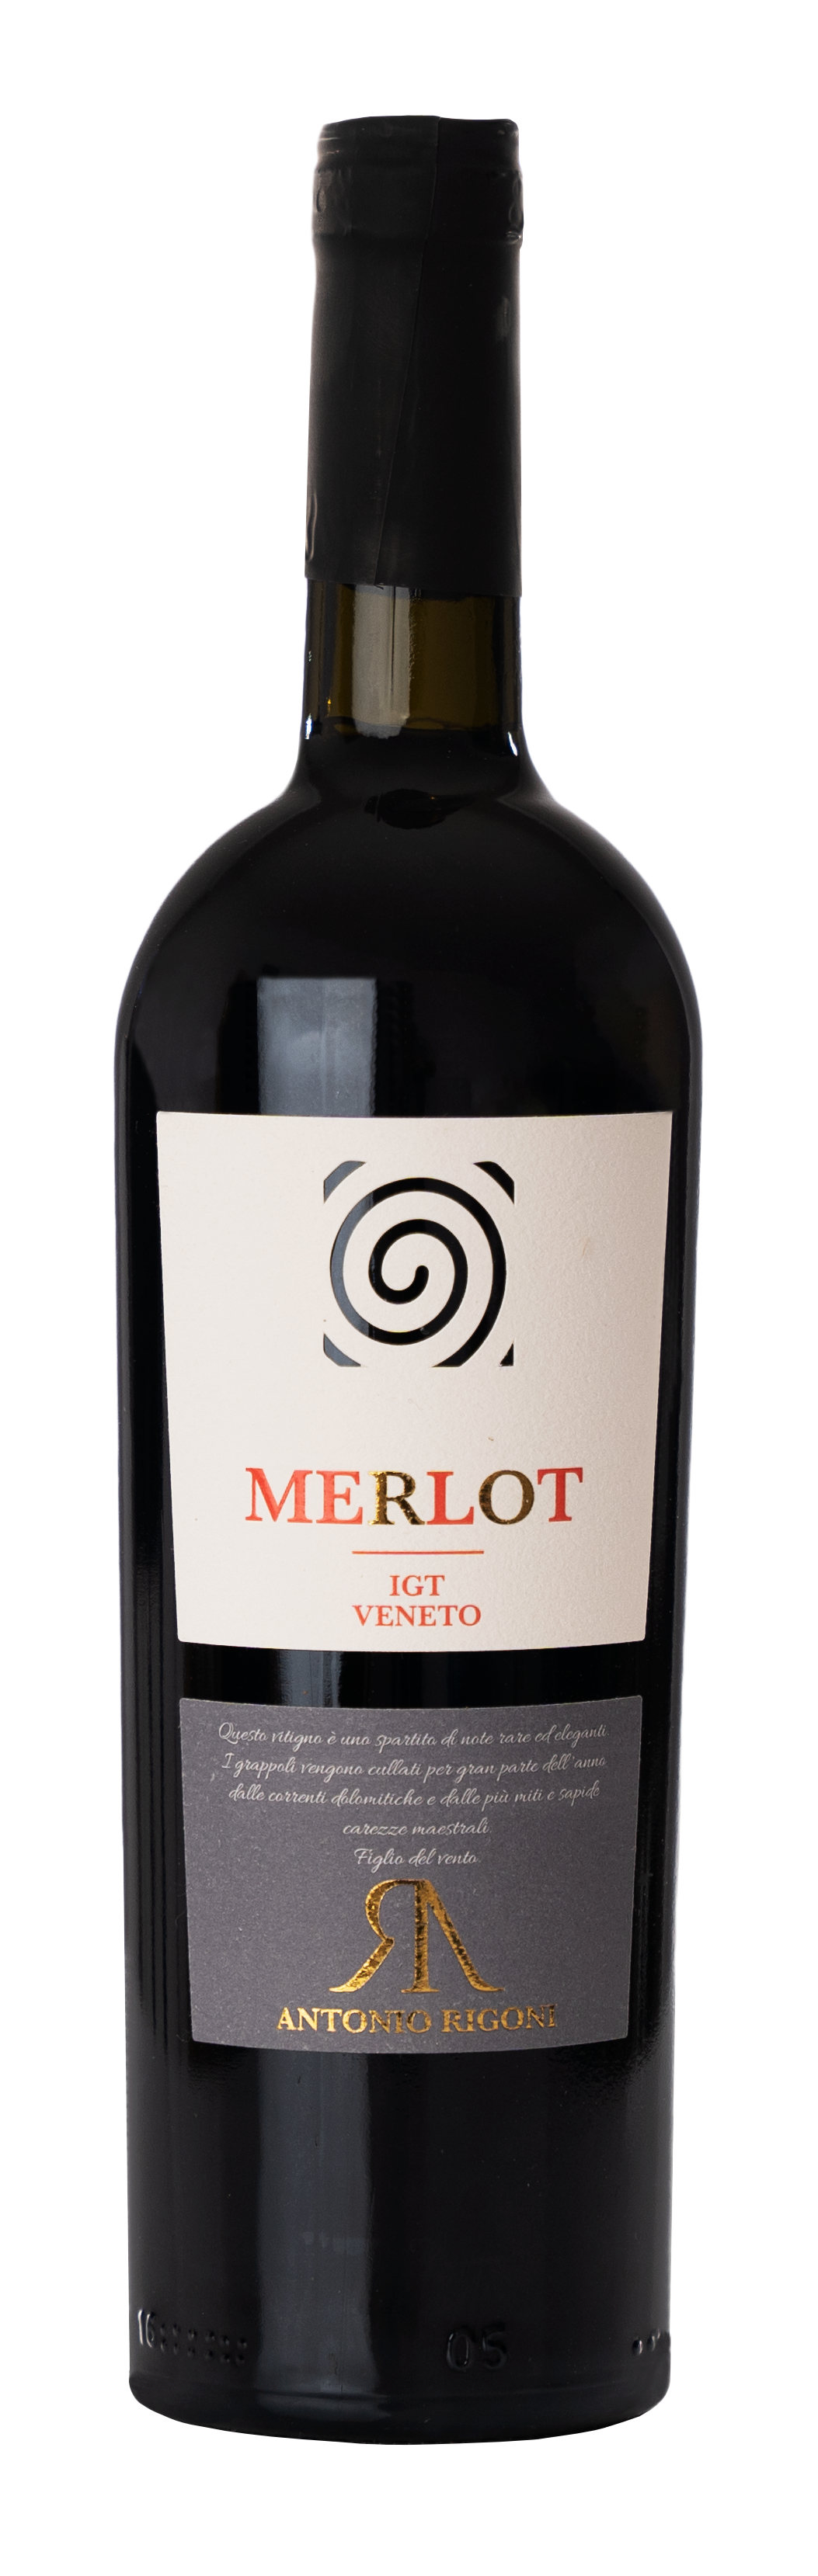 Merlot rosso Antonio Rigoni vini